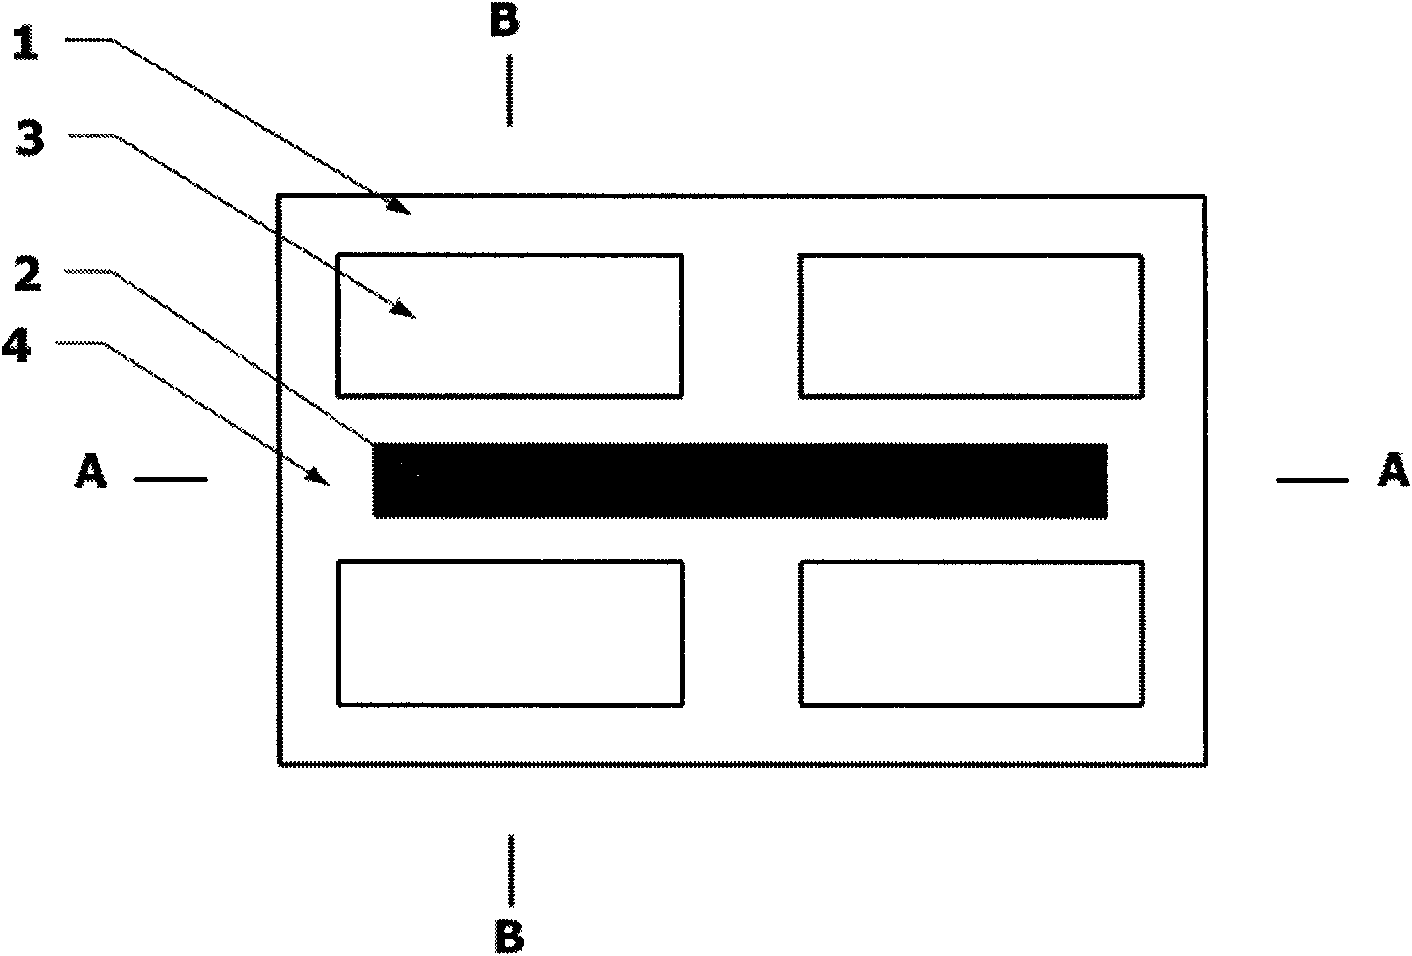 A composite self-insulating block